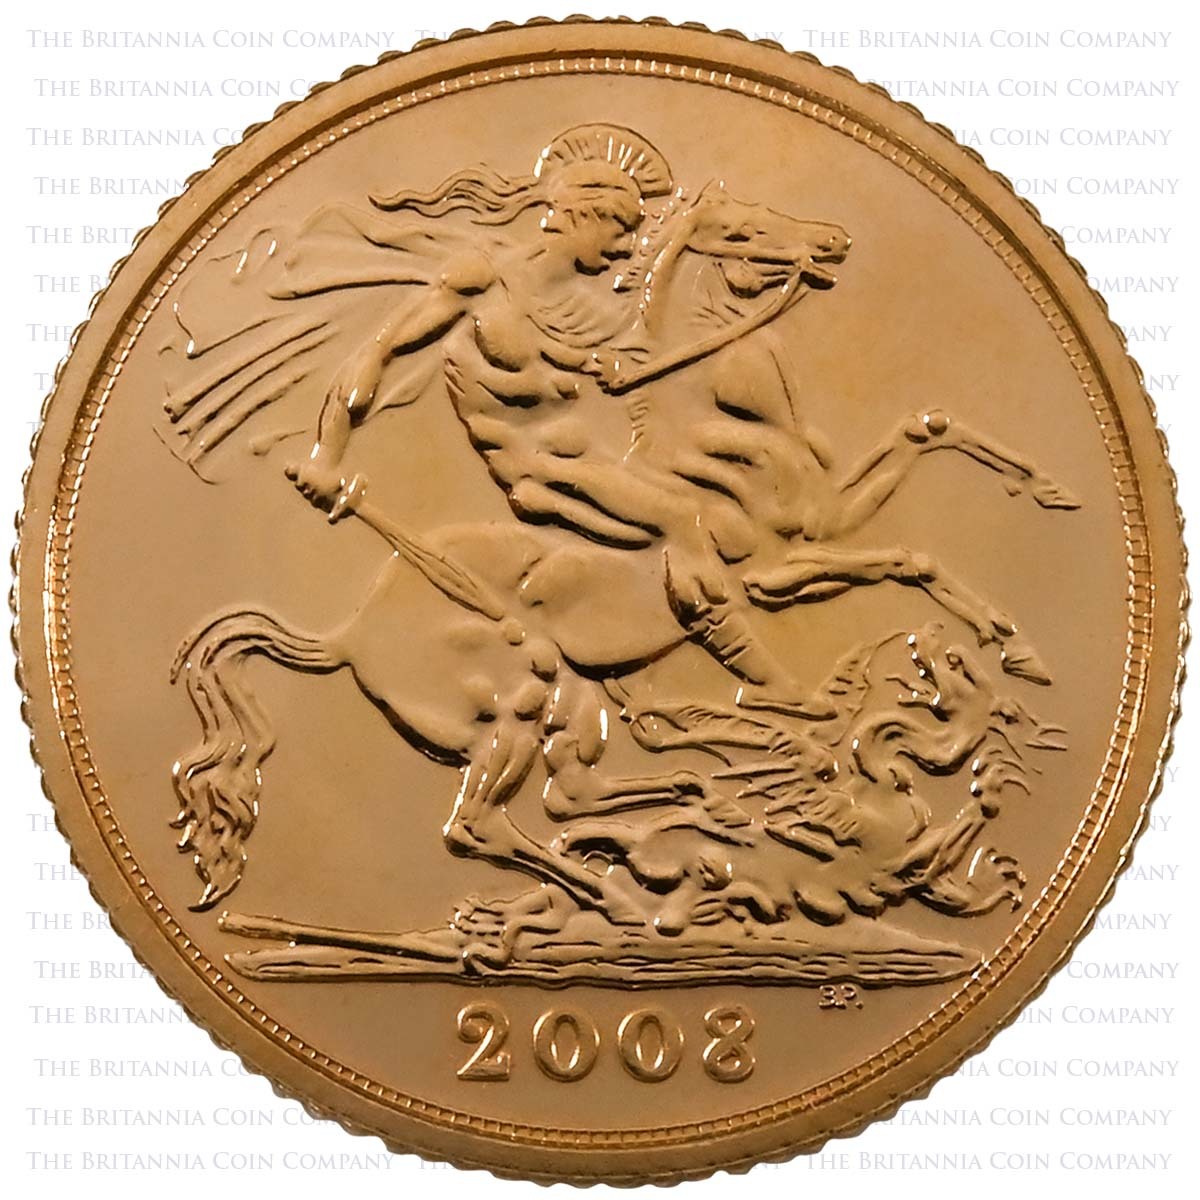 2008 Elizabeth II Gold Half Sovereign Reverse